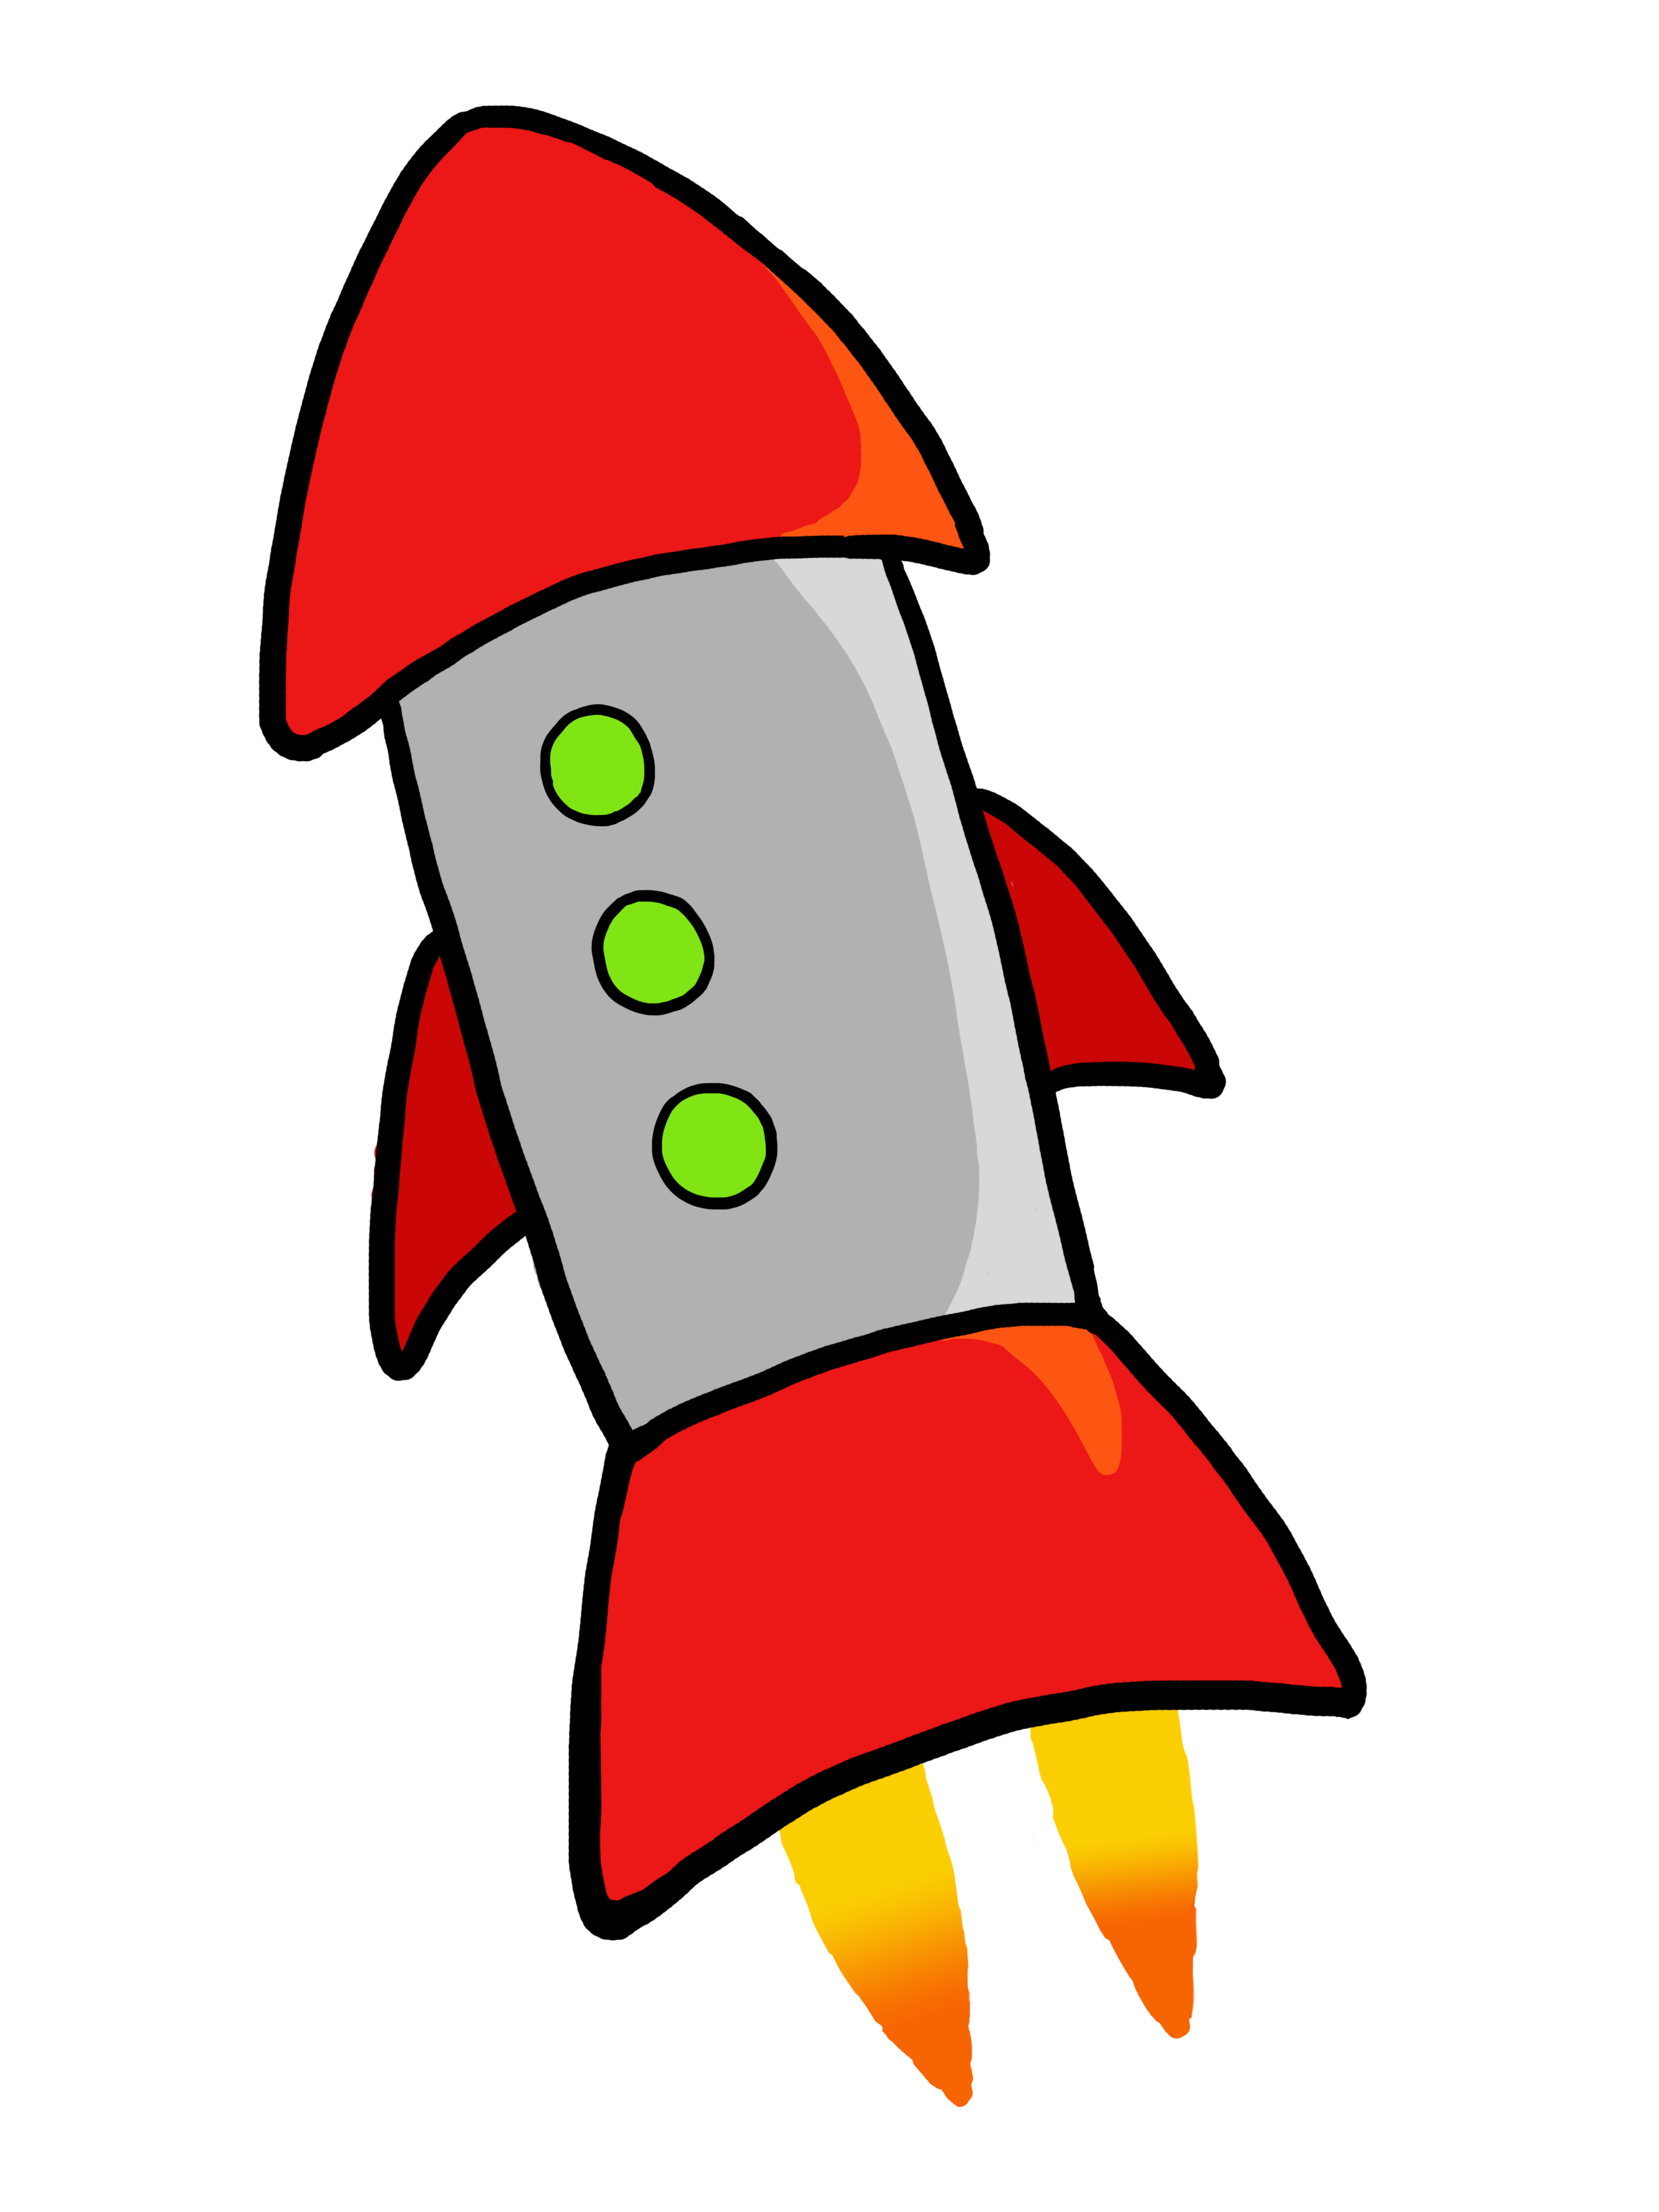 Download PNG image - Rocket PNG Image 